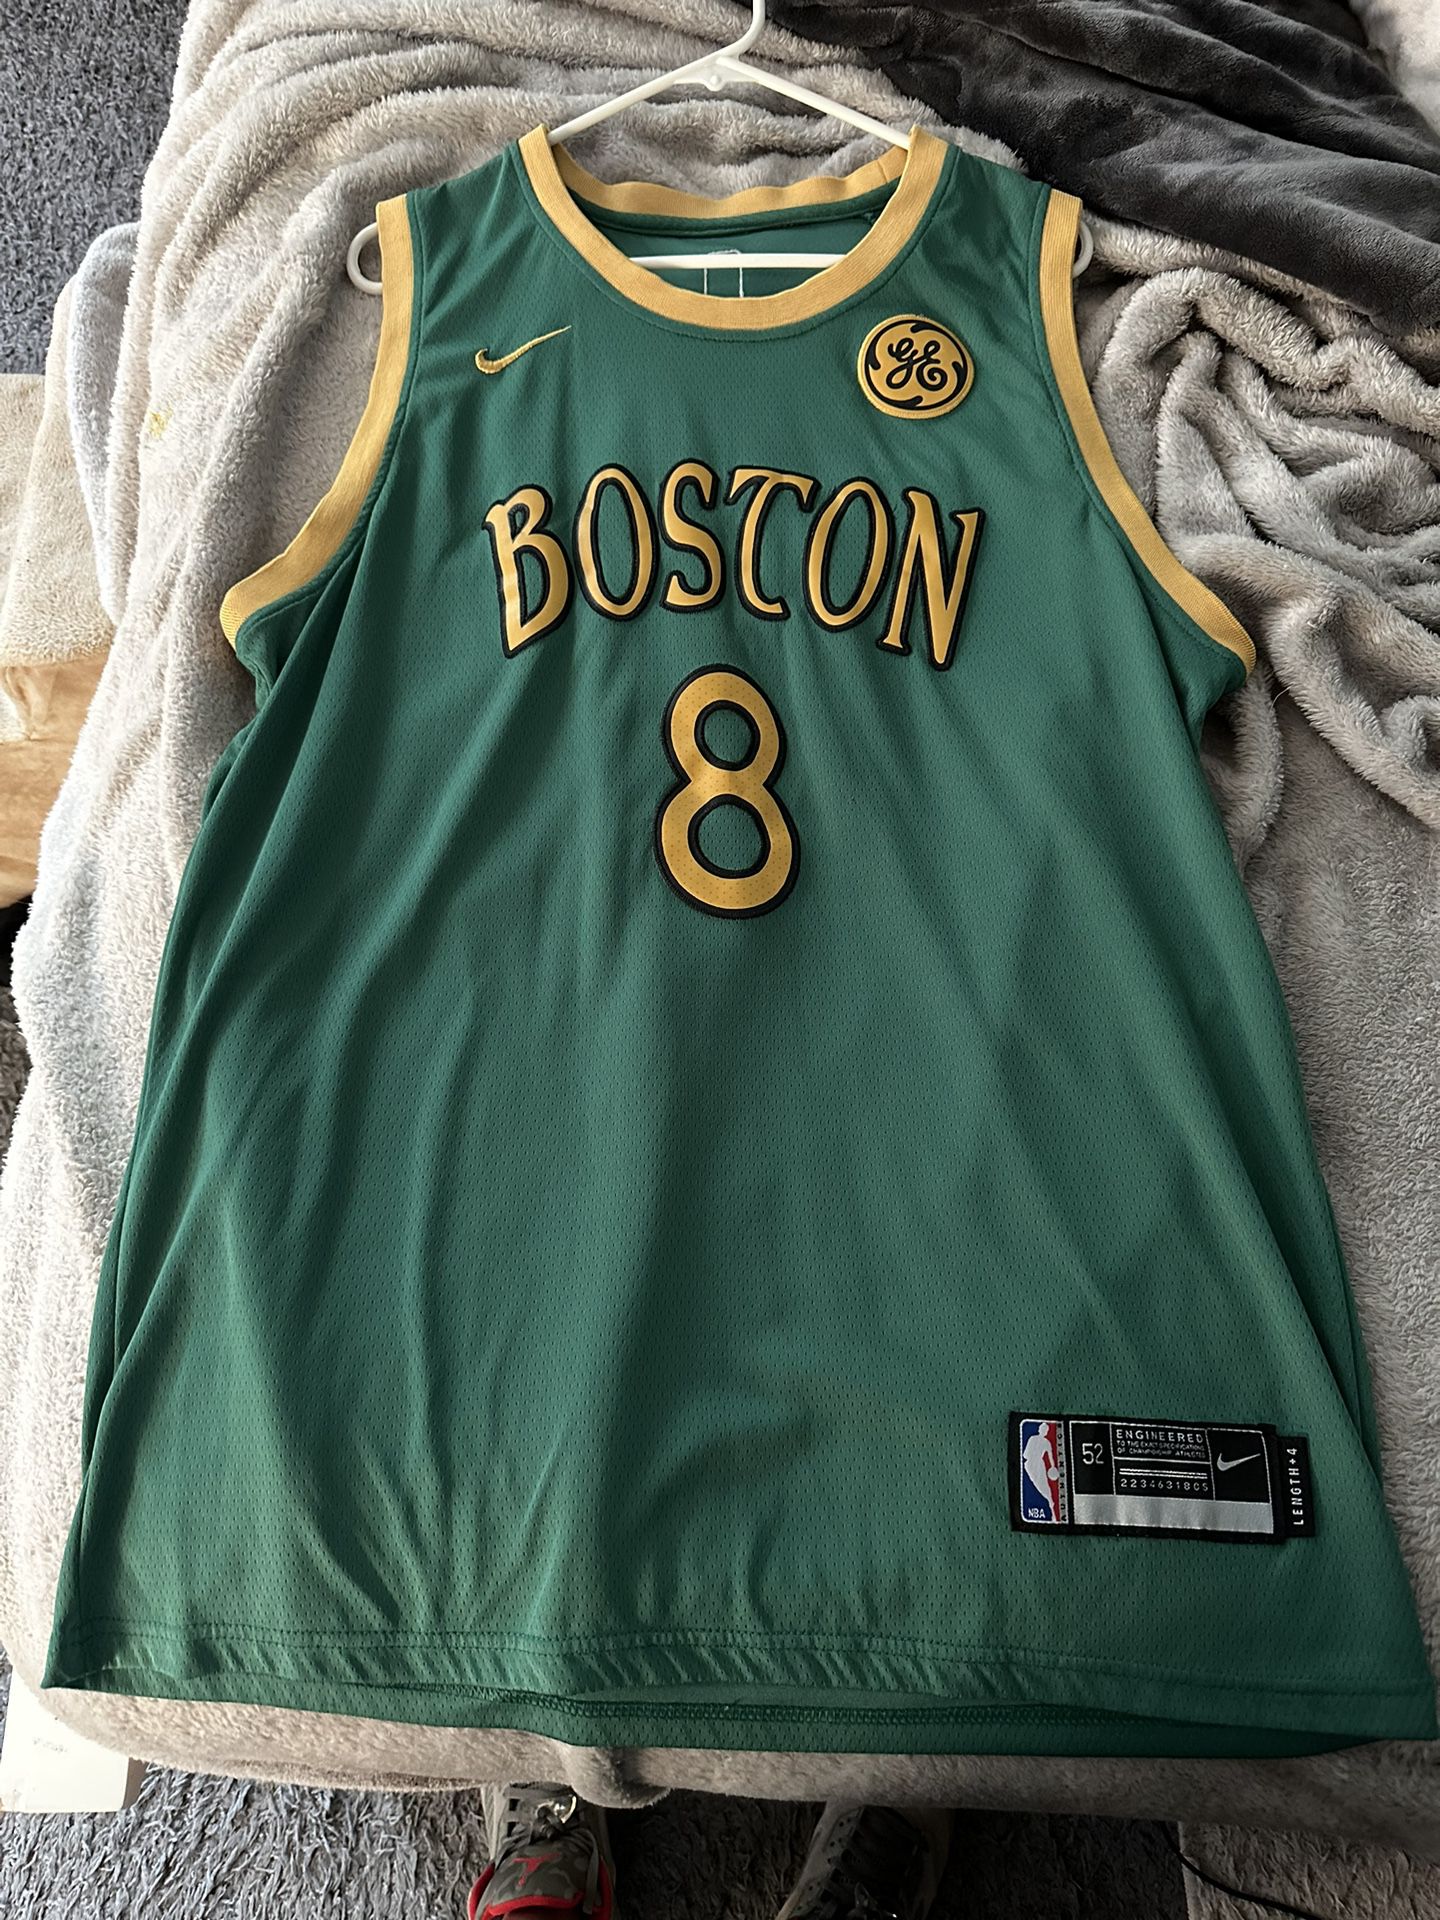 NBA Kemba Walker Celtics jersey